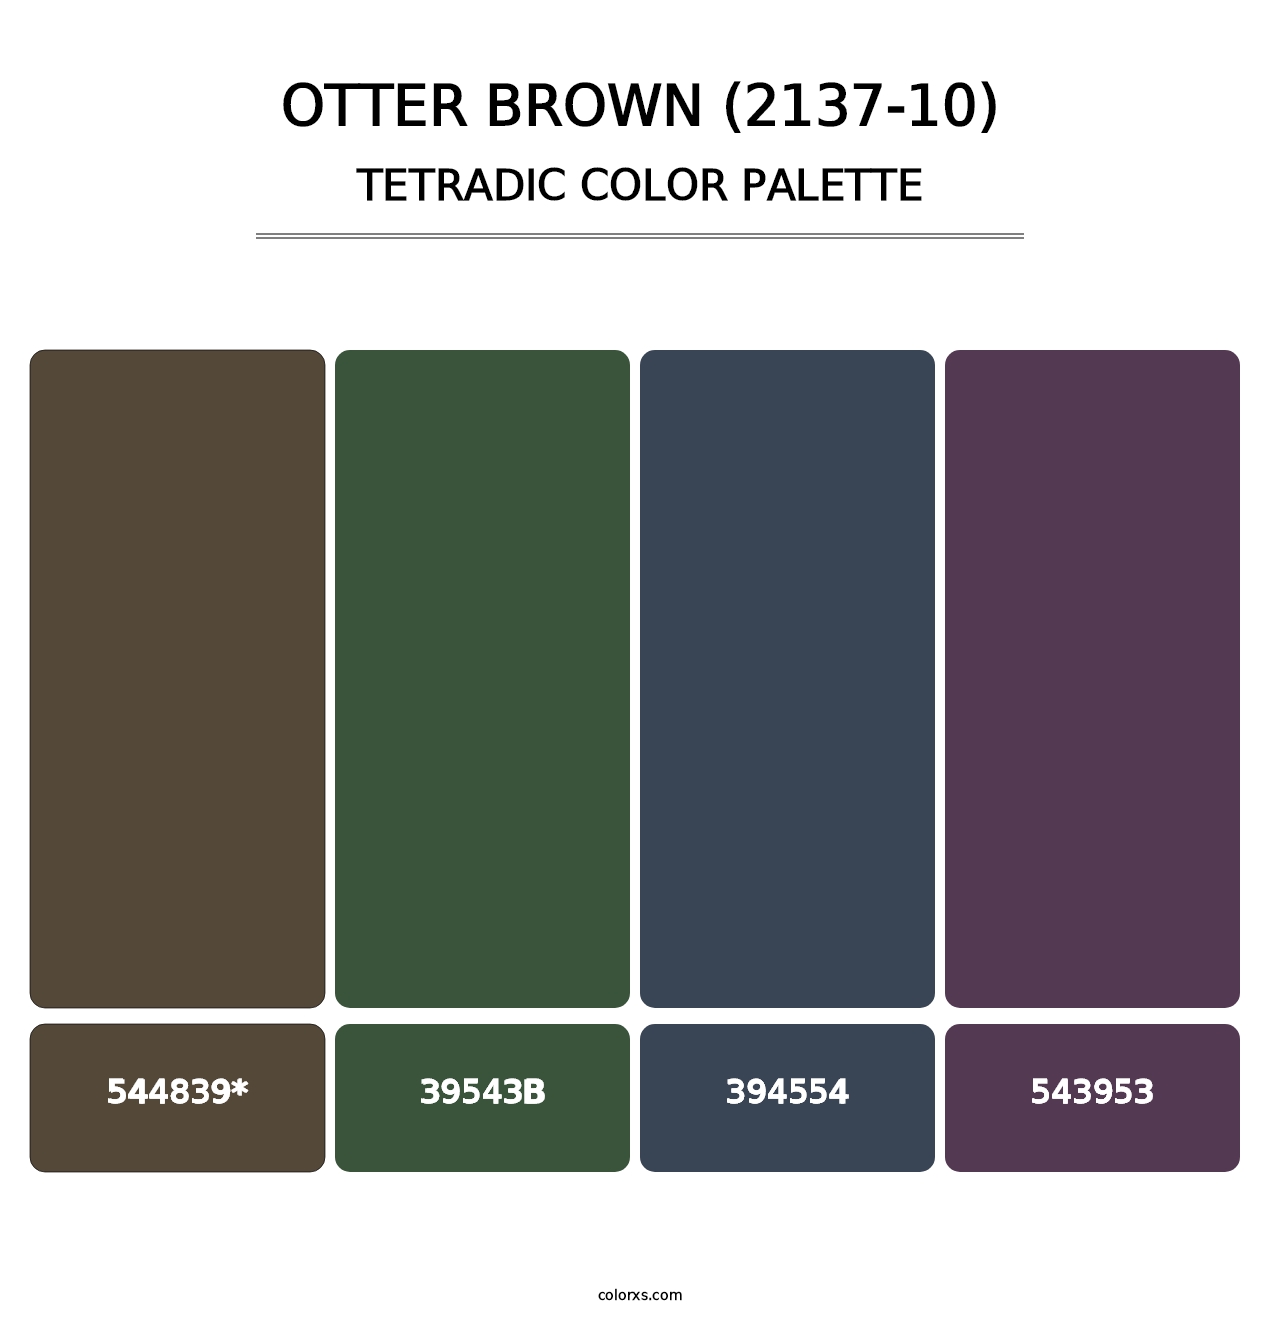 Otter Brown (2137-10) - Tetradic Color Palette